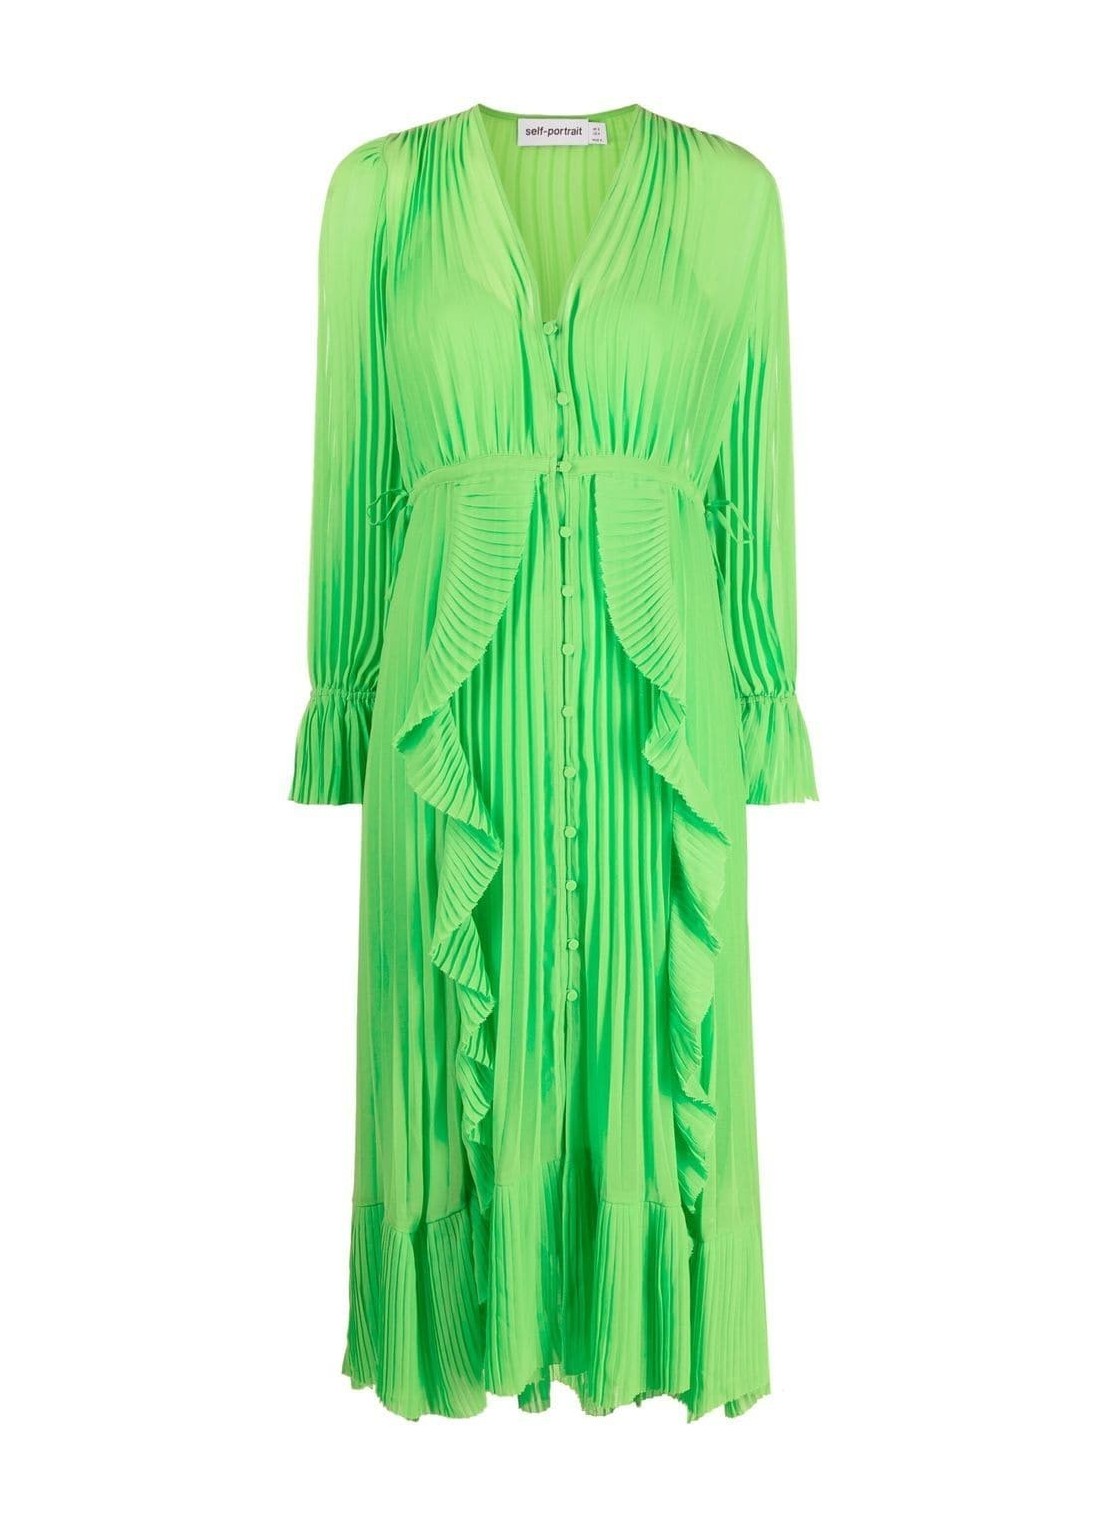 Vestido self-portrait green chiffon ruffle midi dress - rs23102m green talla 6
 